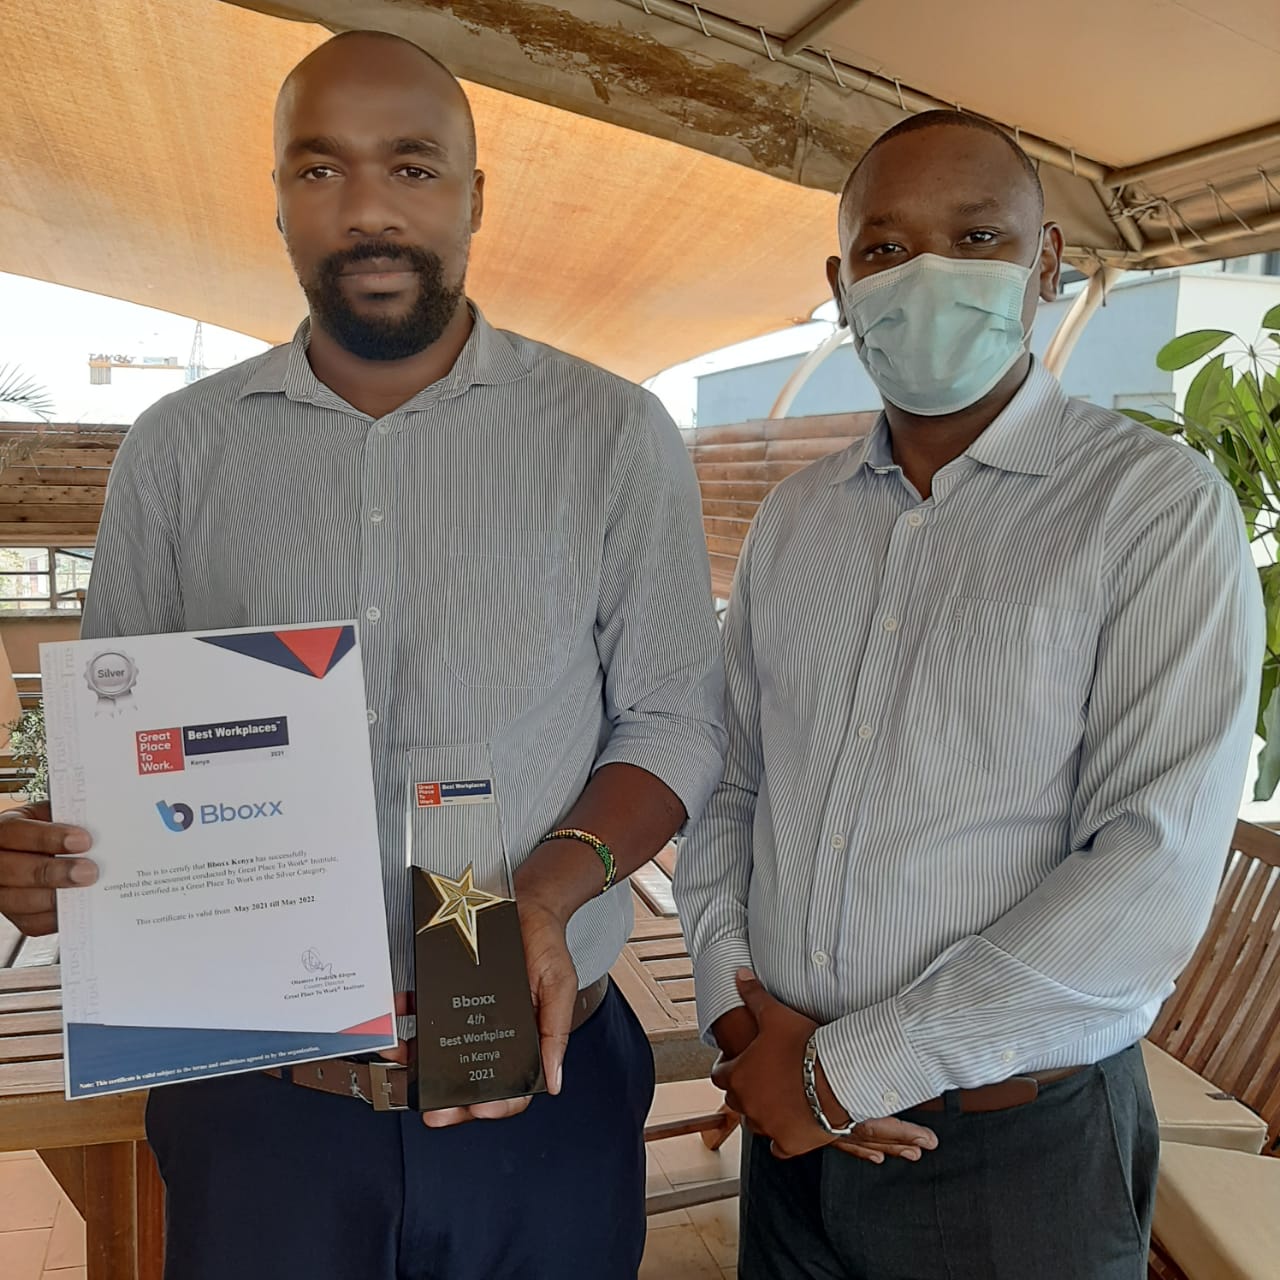 Bboxx Kenya team posses with their award certificate